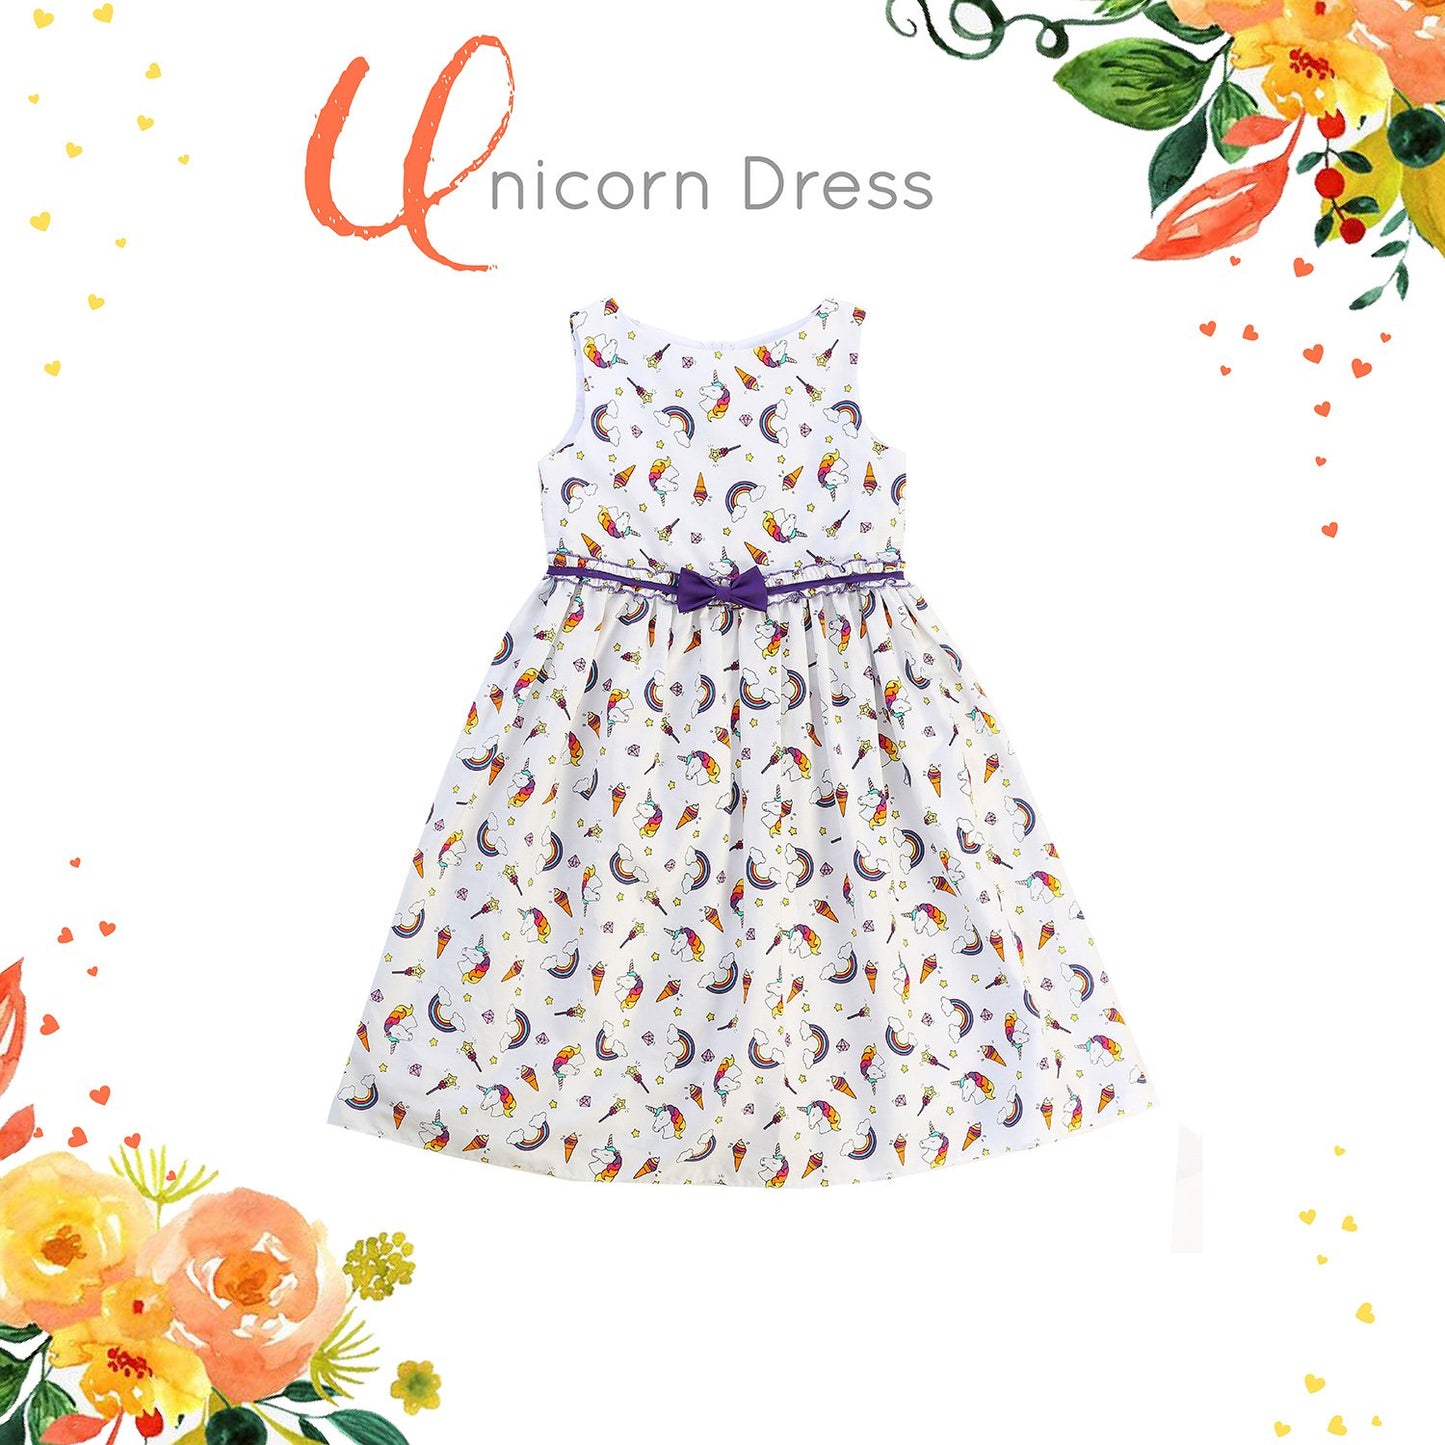 Dress - Unicorn Print Cotton Dress With Bow